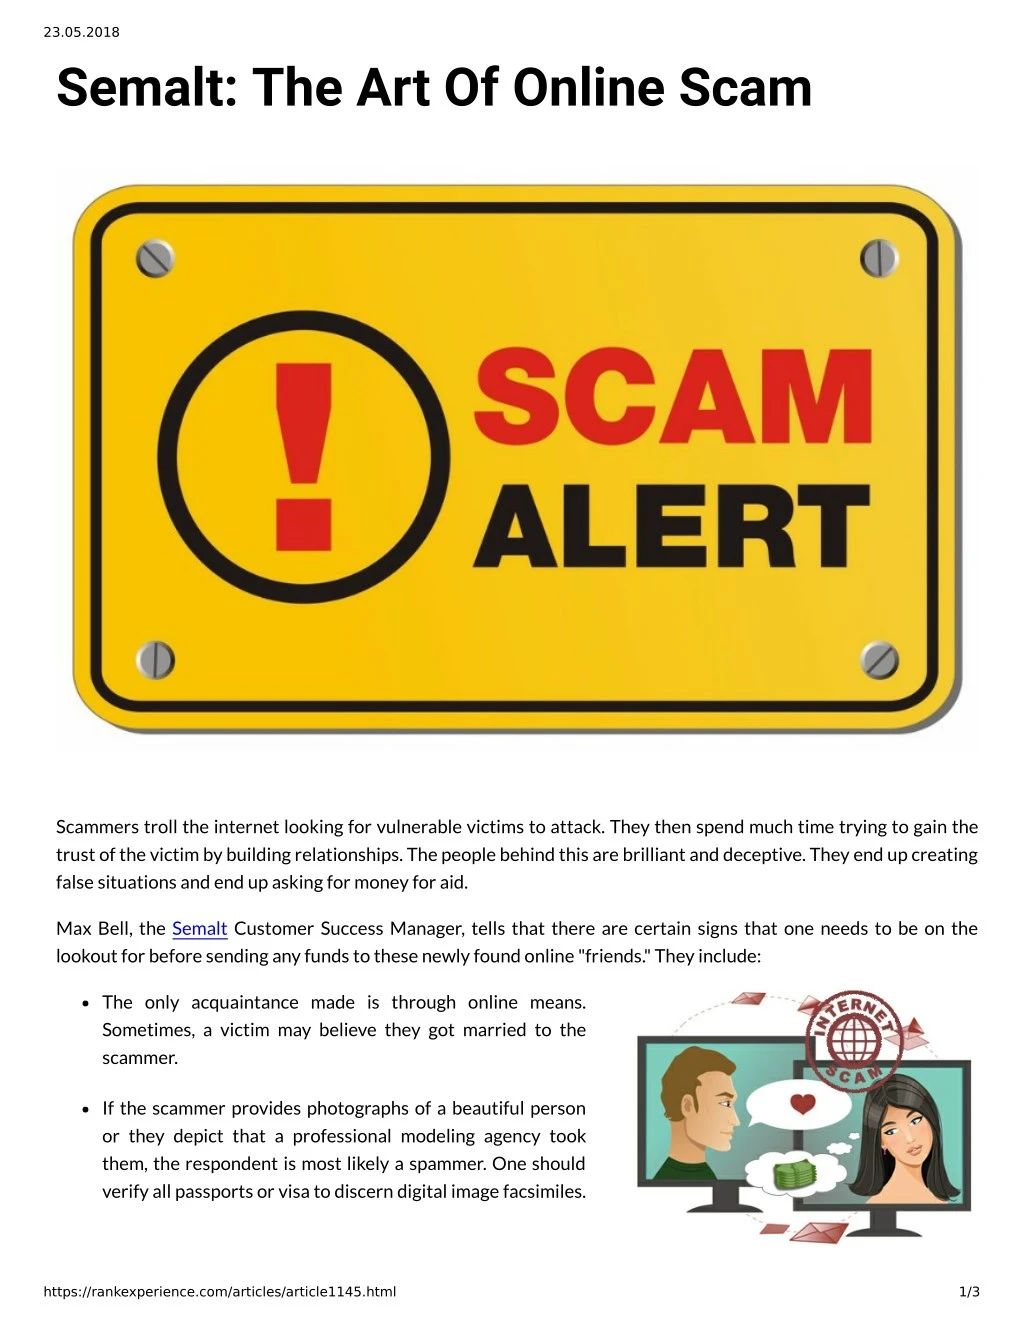 23 05 2018 semalt the art of online scam